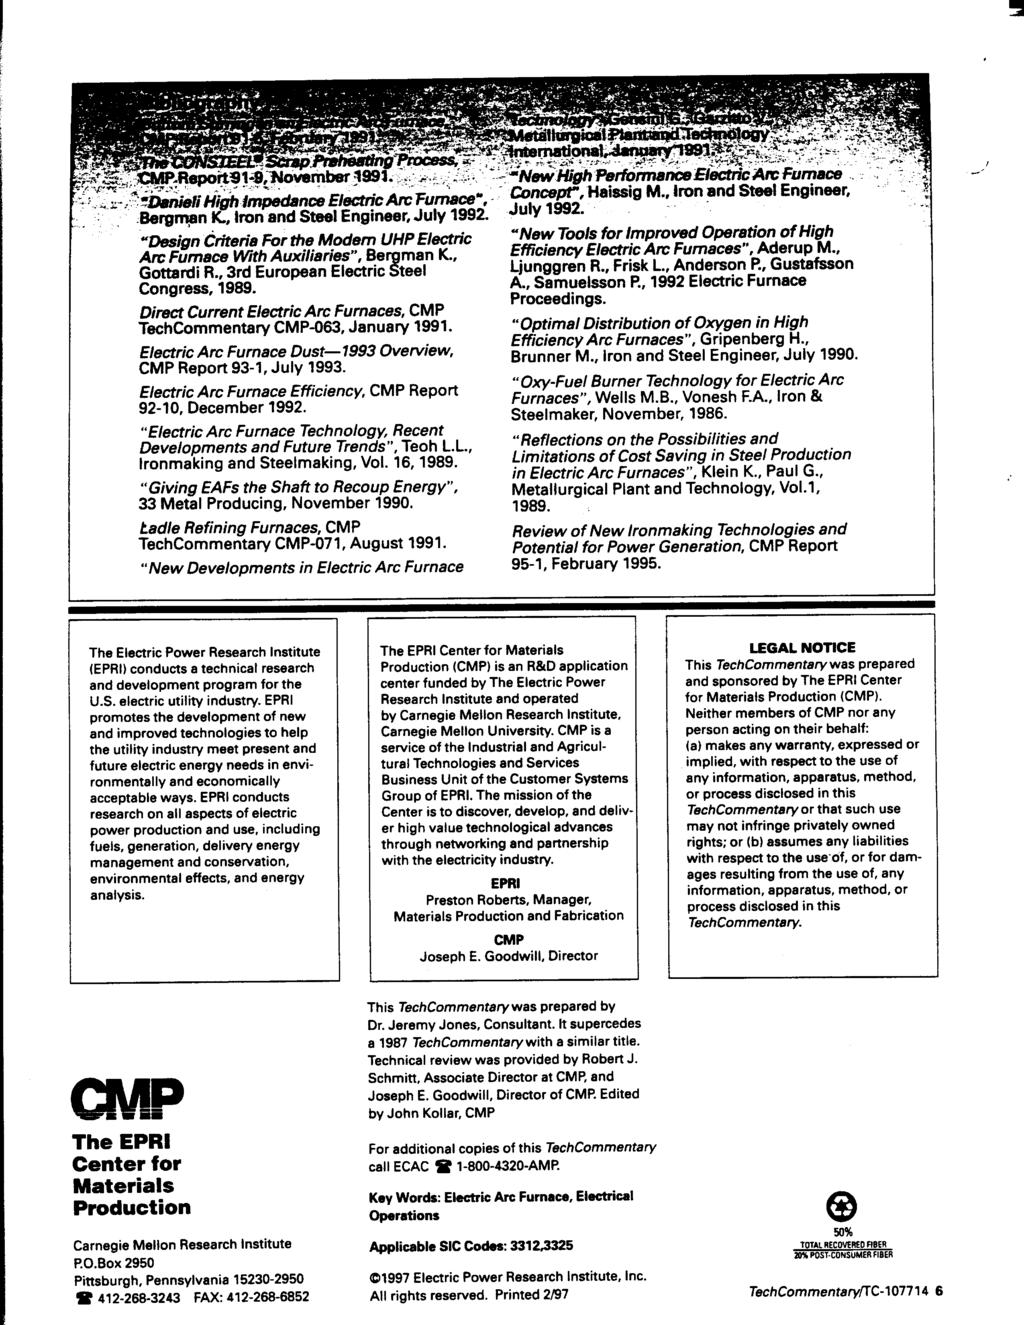 Design Criteria For the Modem UHP Electric Arc Fumece Wth Auxiliaries, Be man K., Gottardi R., 3rd European Electric 2 tee1 Congress, 1989.